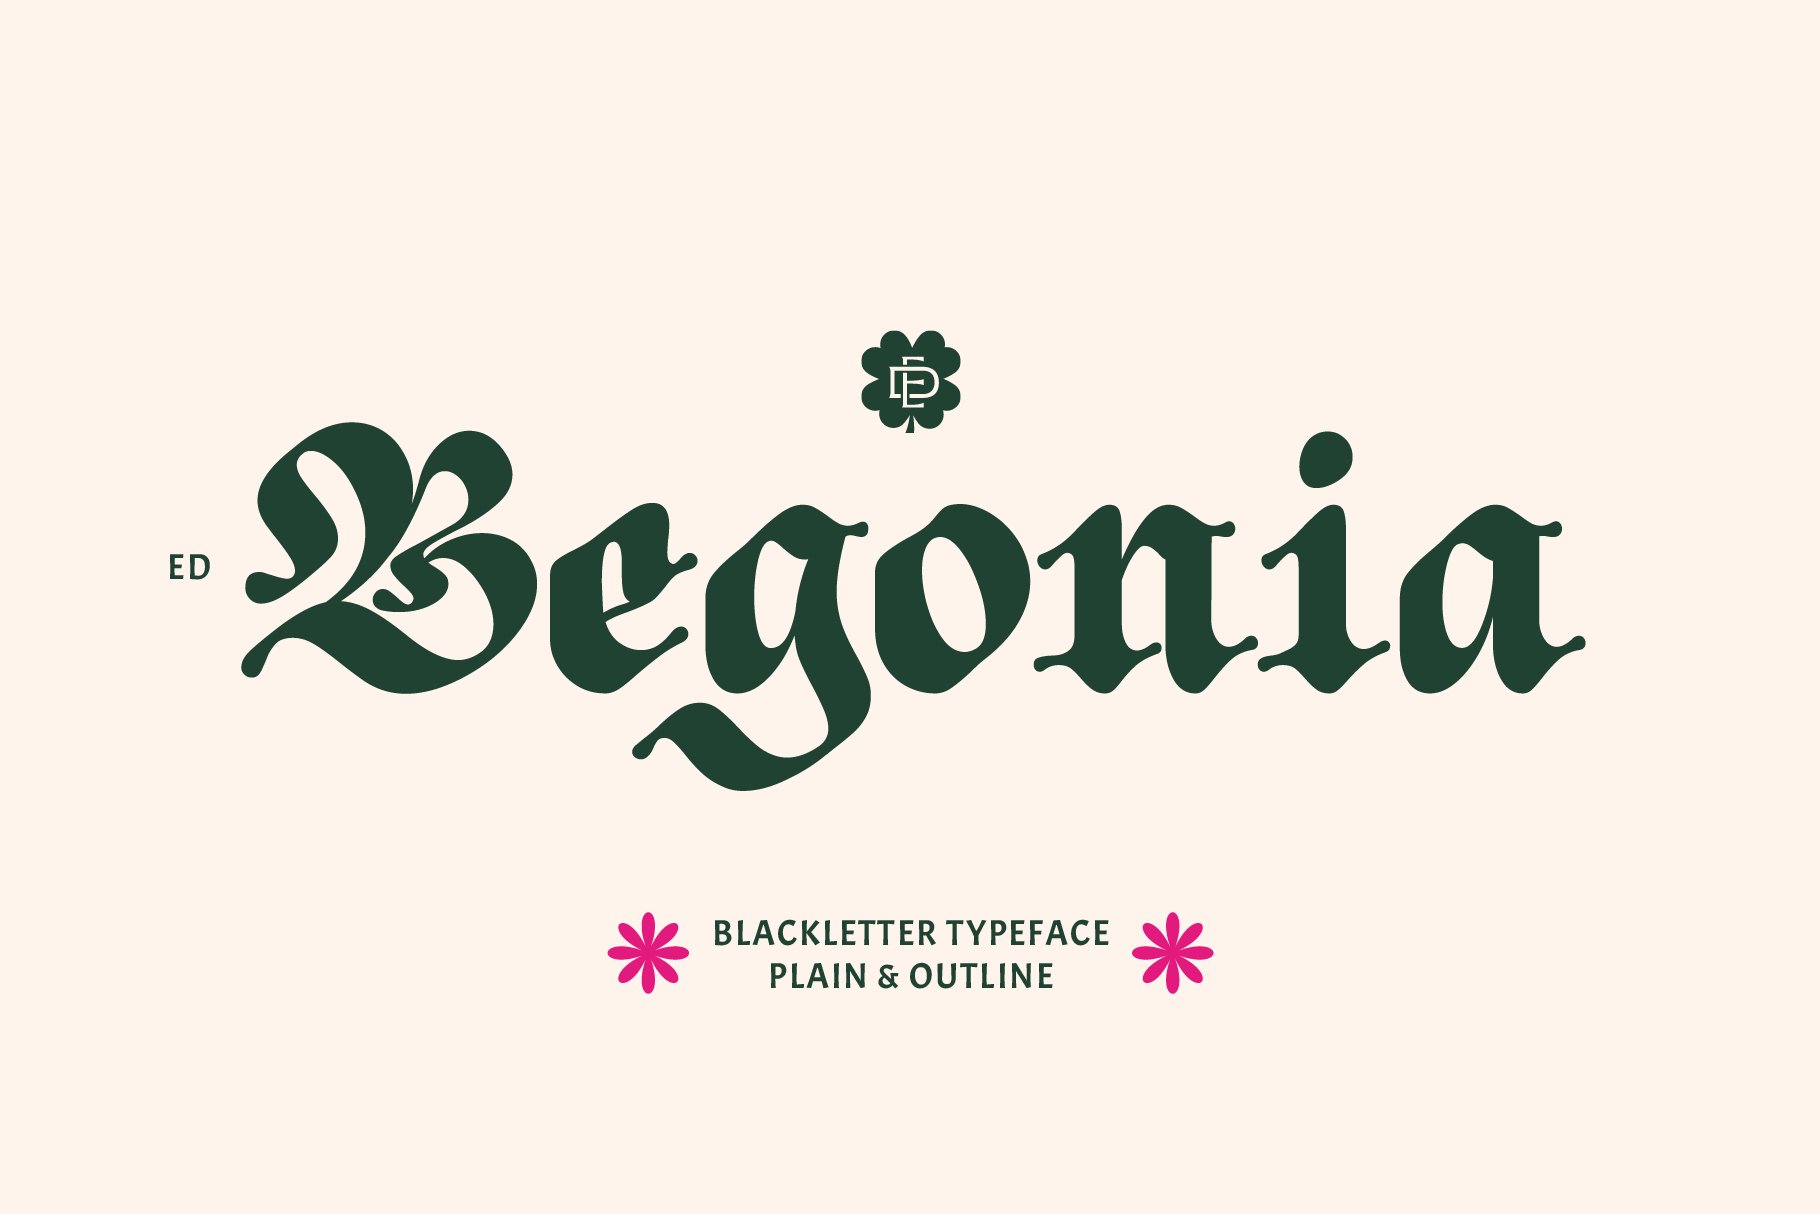 ED Begonia - Blackletter Typeface cover image.